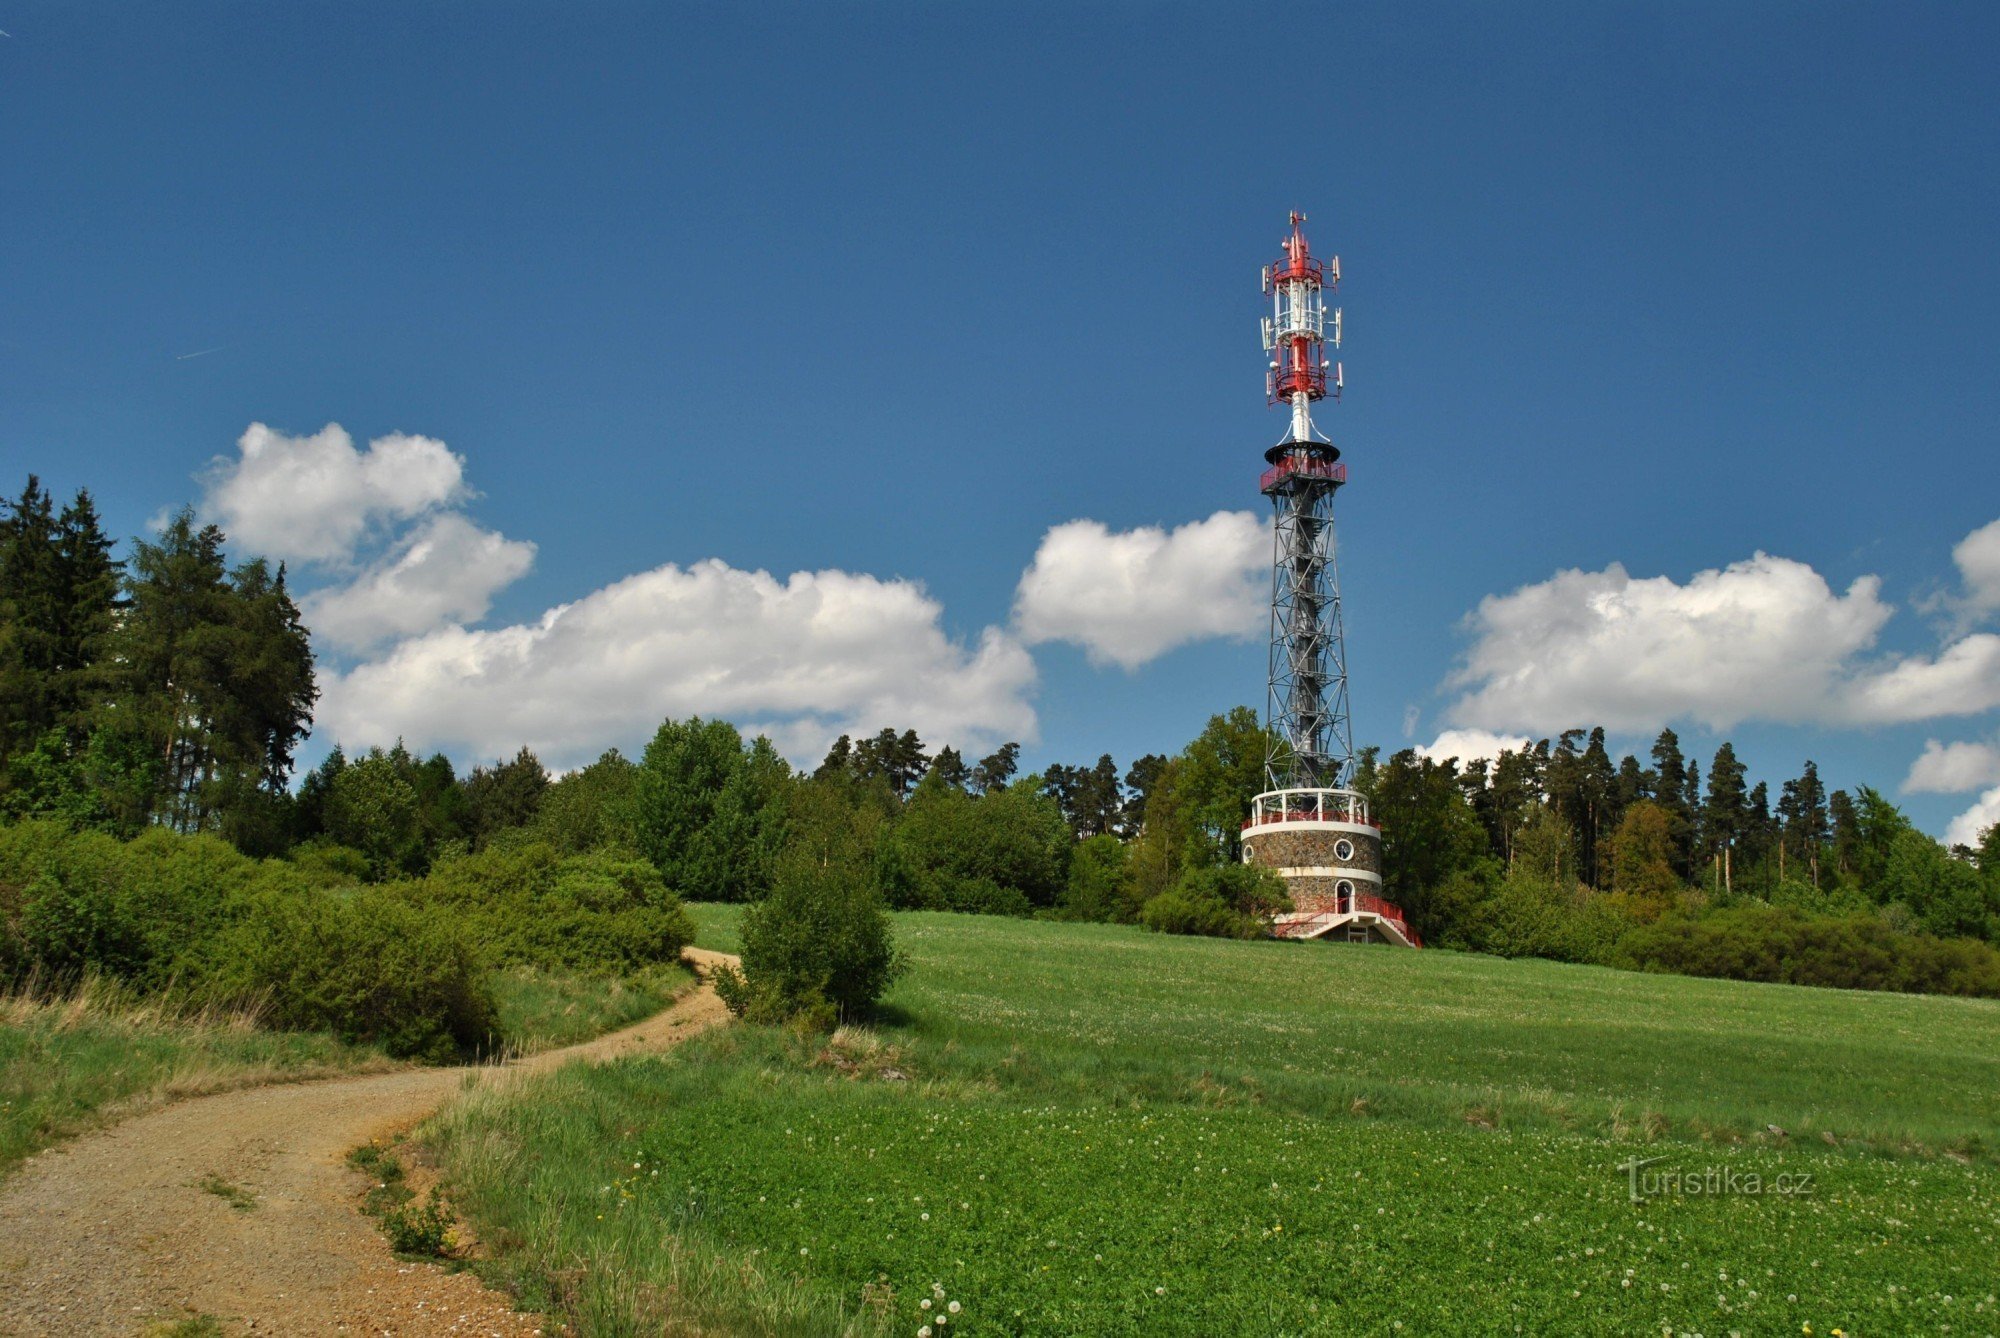 Torre de observação Kuníček perto de Petrovice